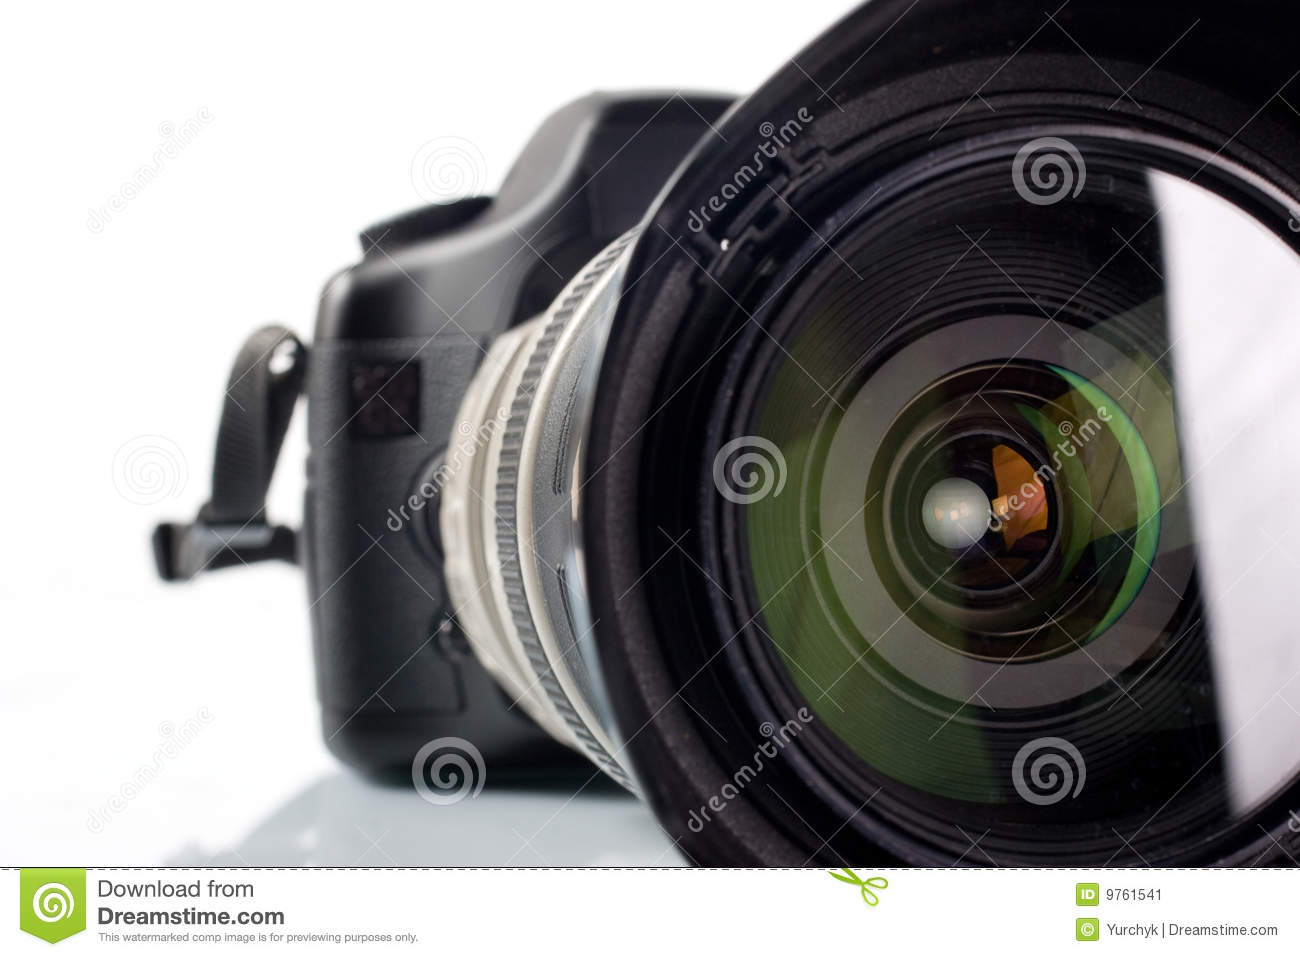 Professional Digital Camera and Lens